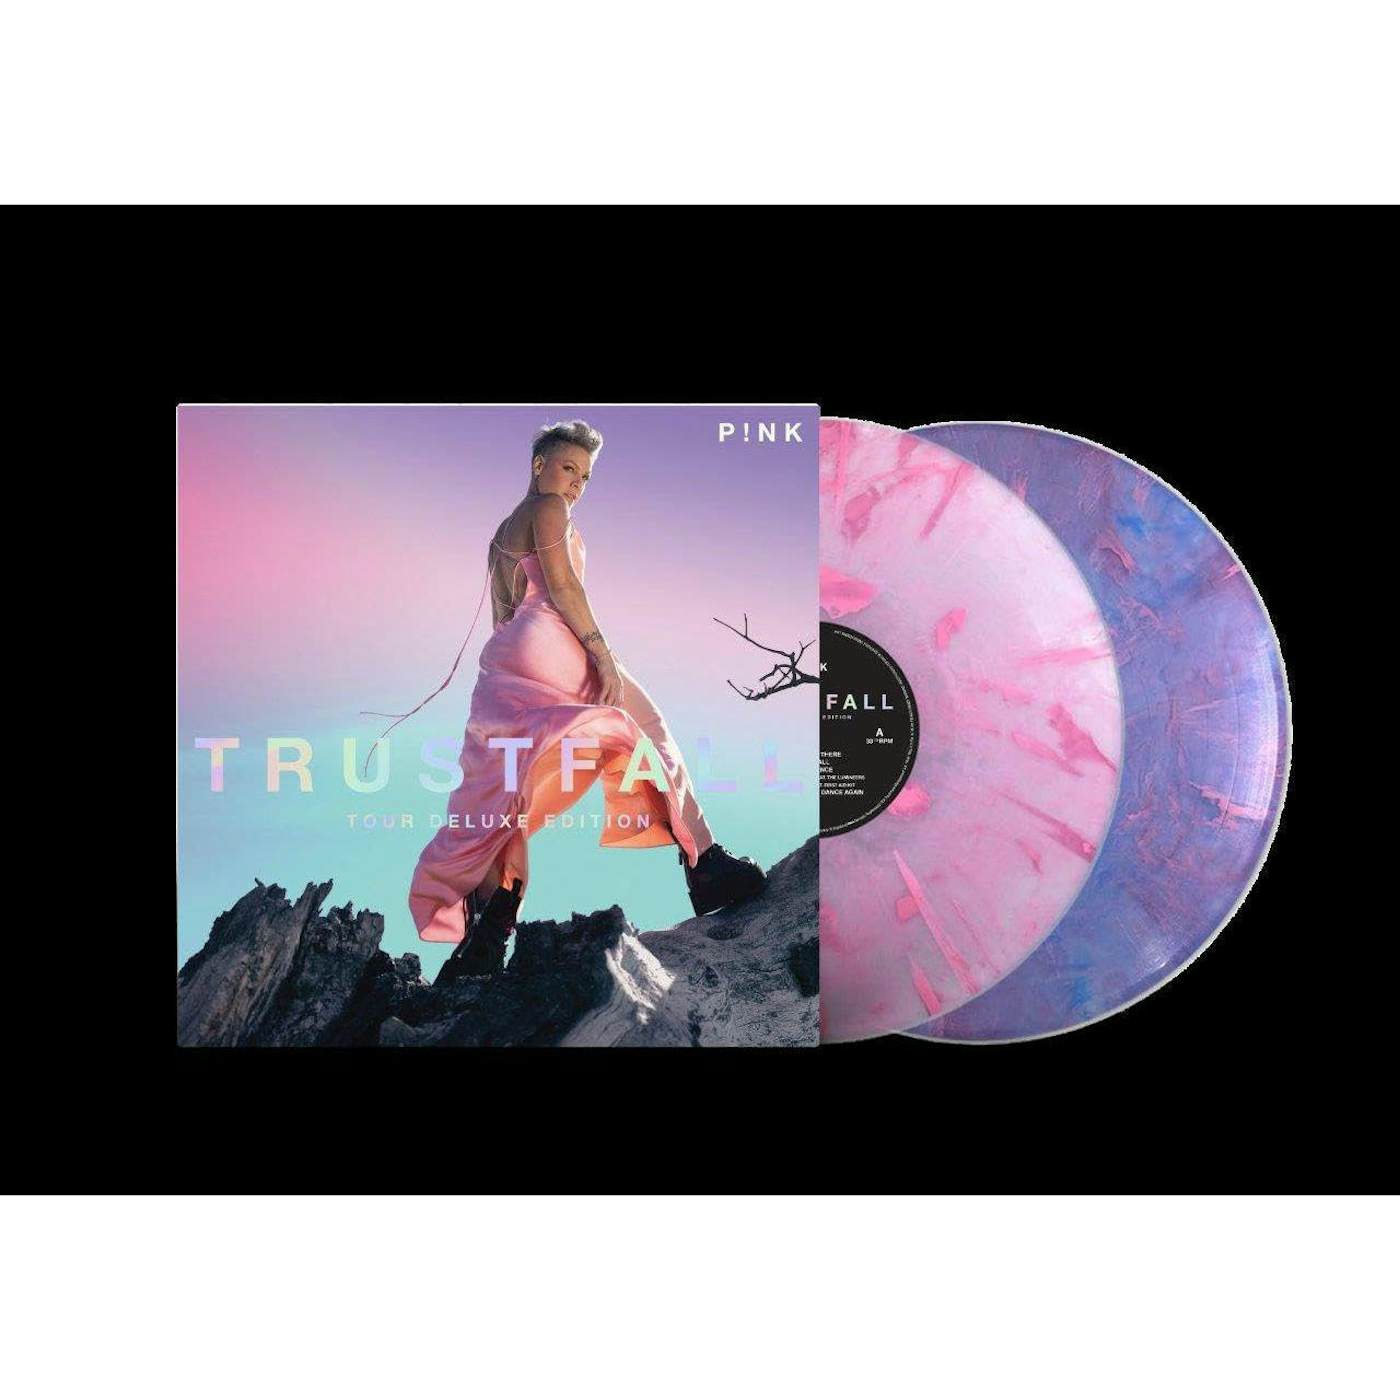 P!nk TRUSTFALL - Tour Deluxe Edition (2LP) Vinyl Record